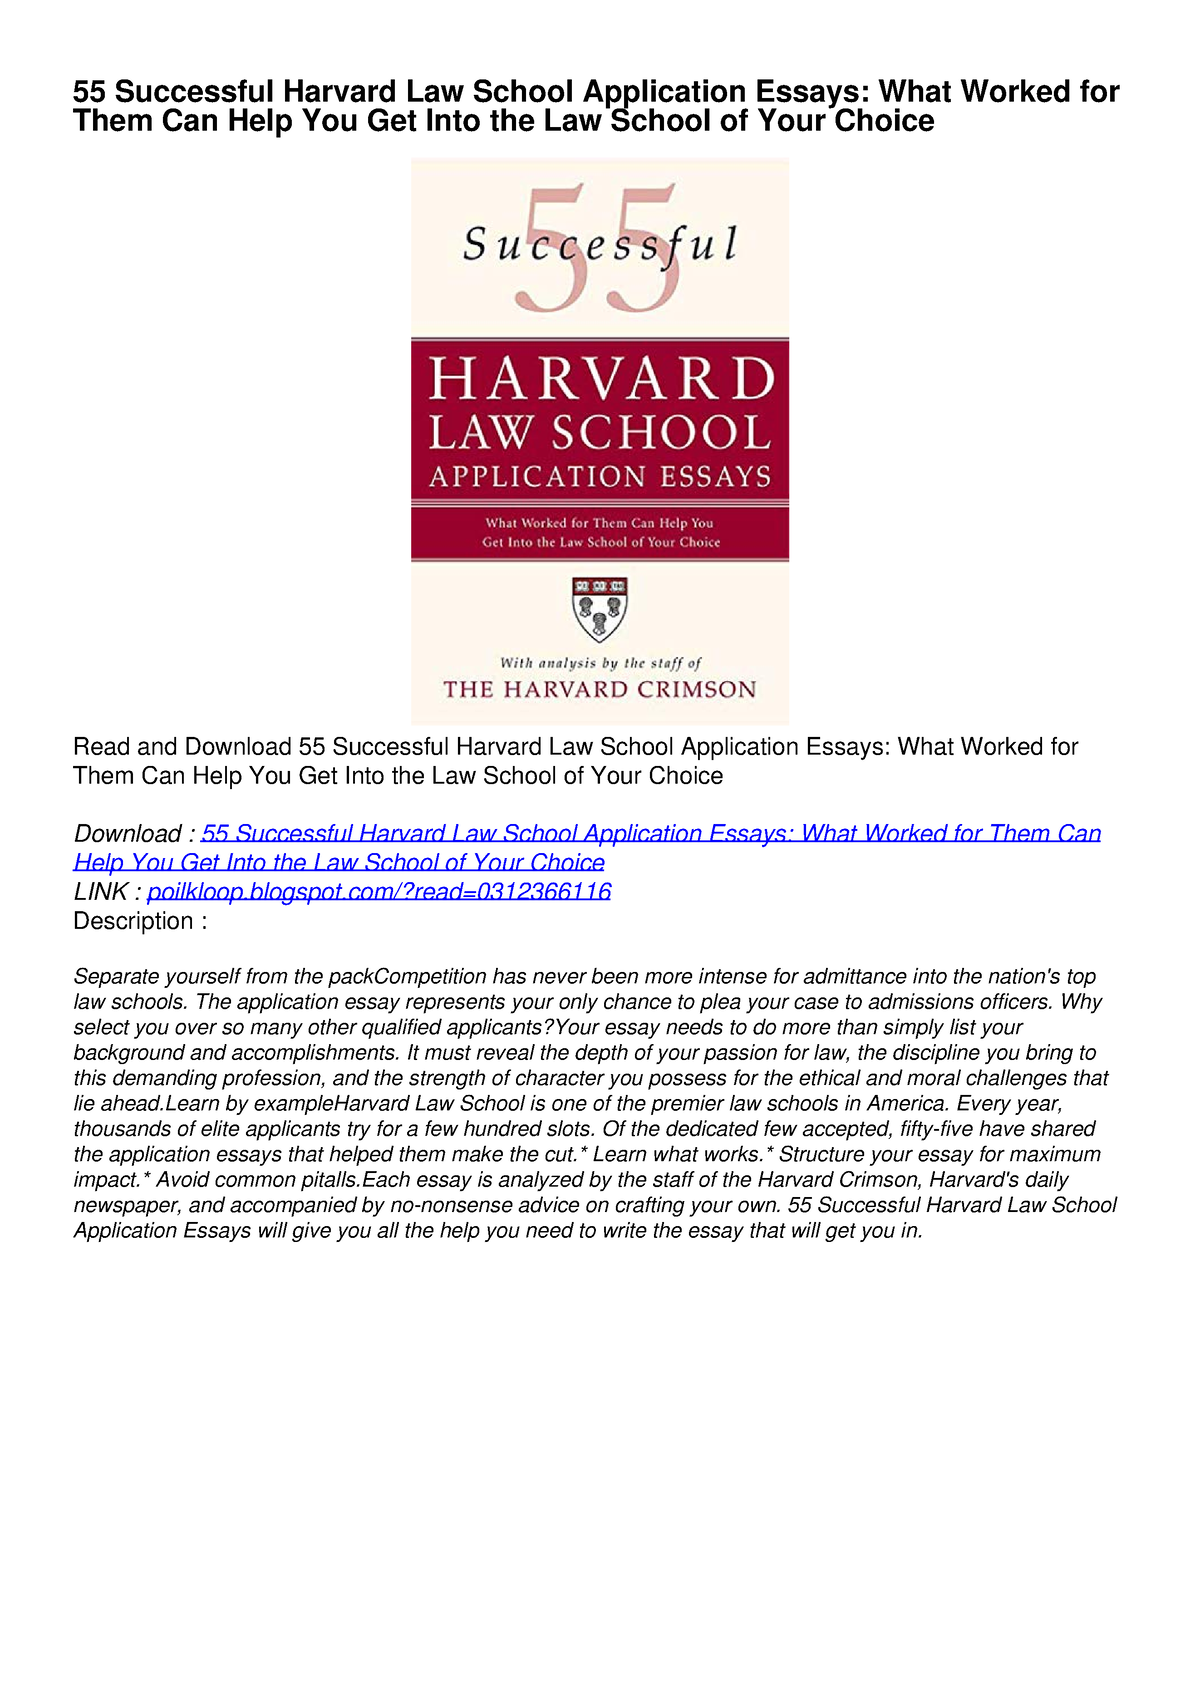 55 successful harvard law school application essays pdf